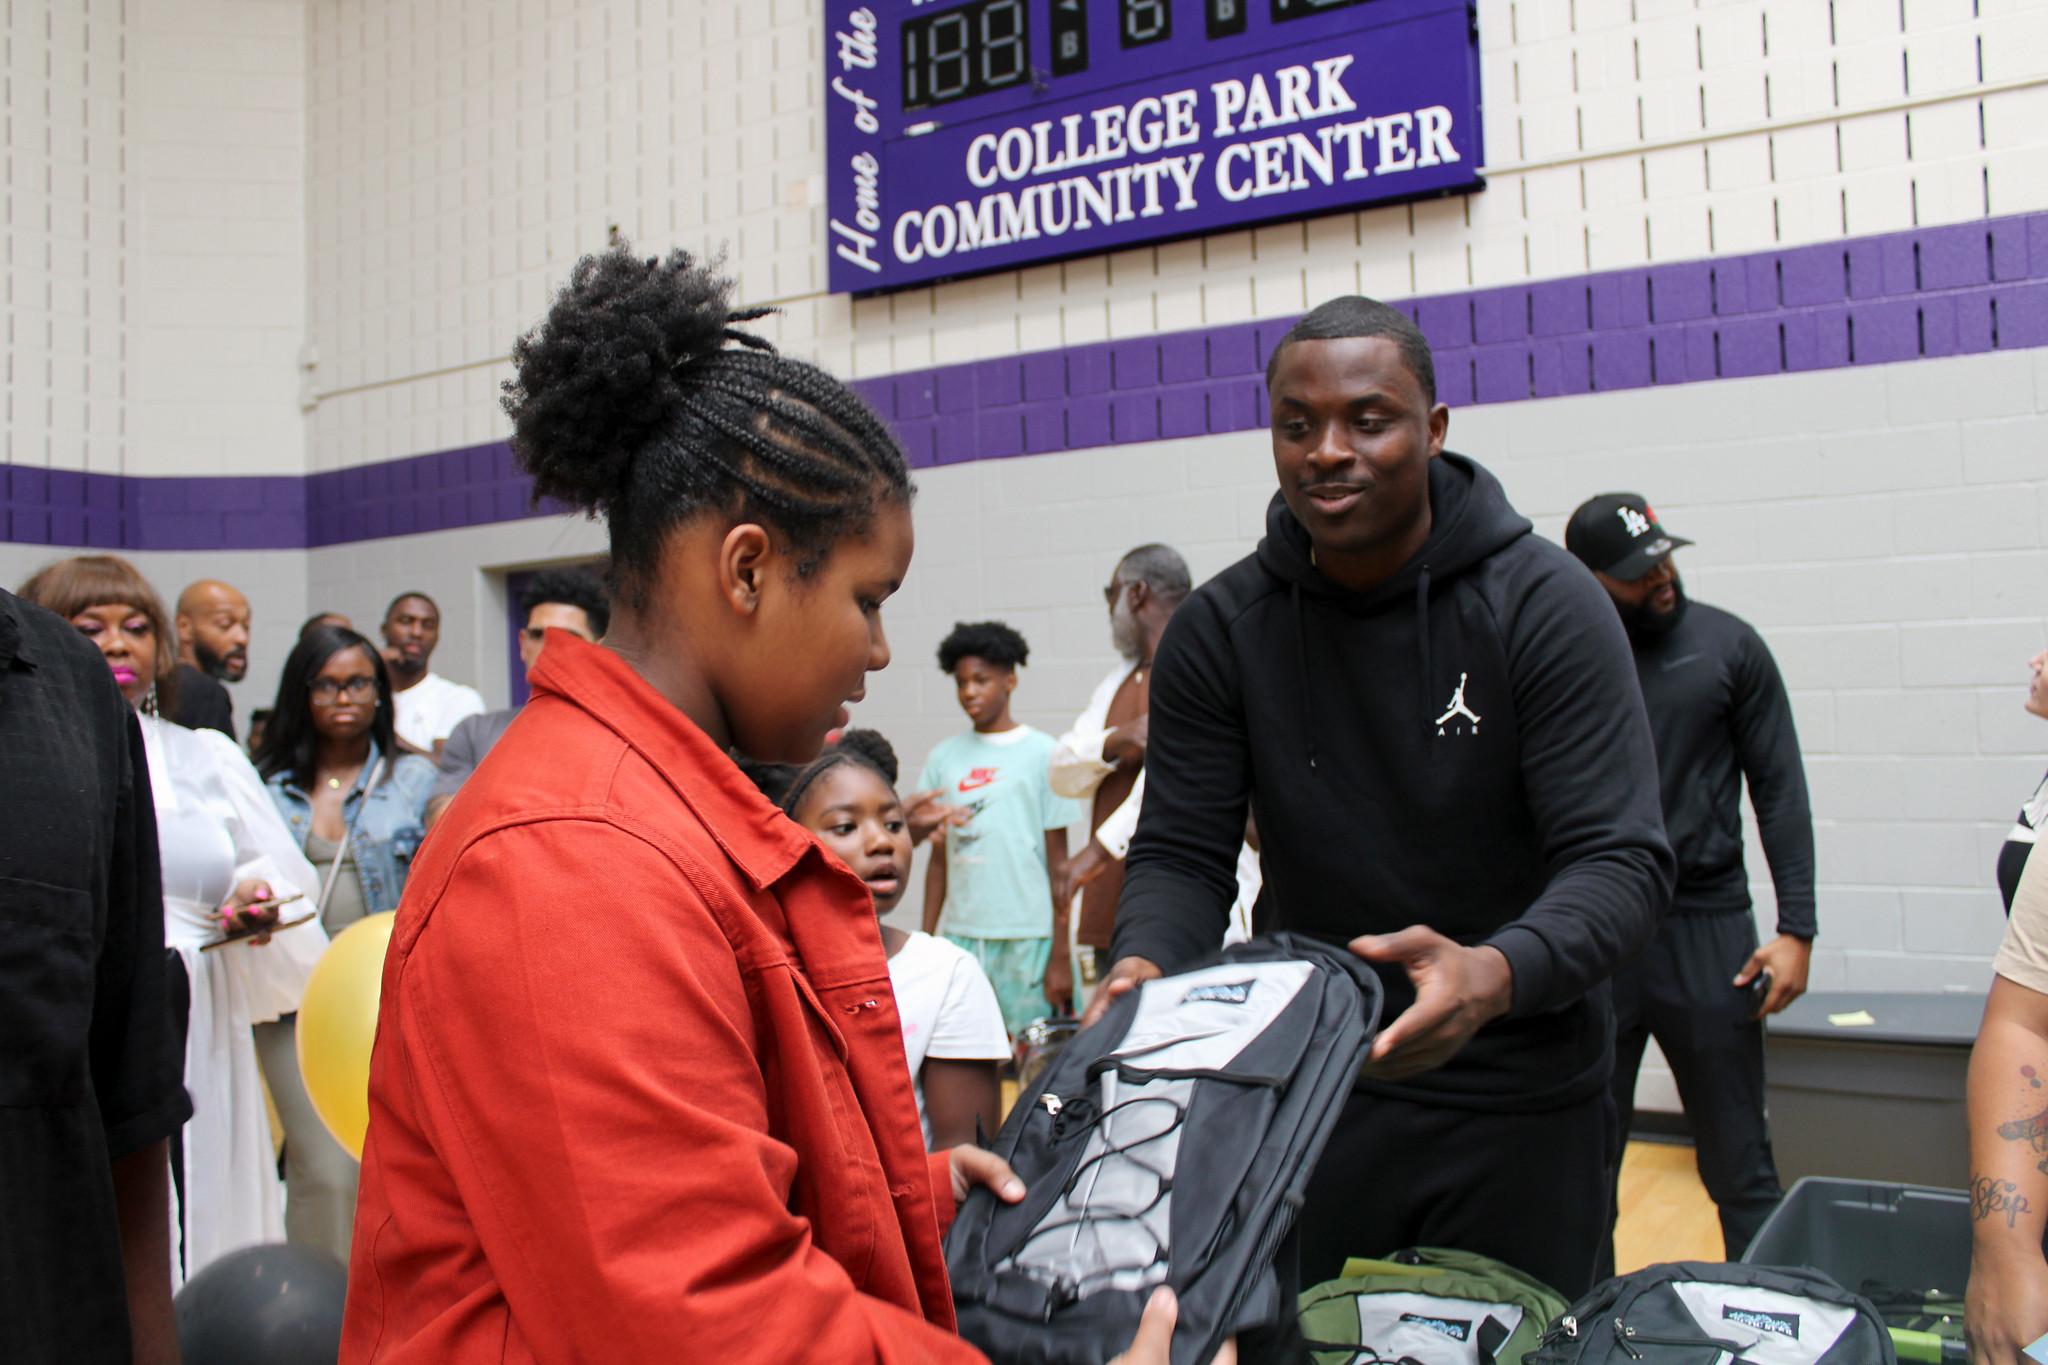 Chris Matthews gives away school supplies at College Park Community Center